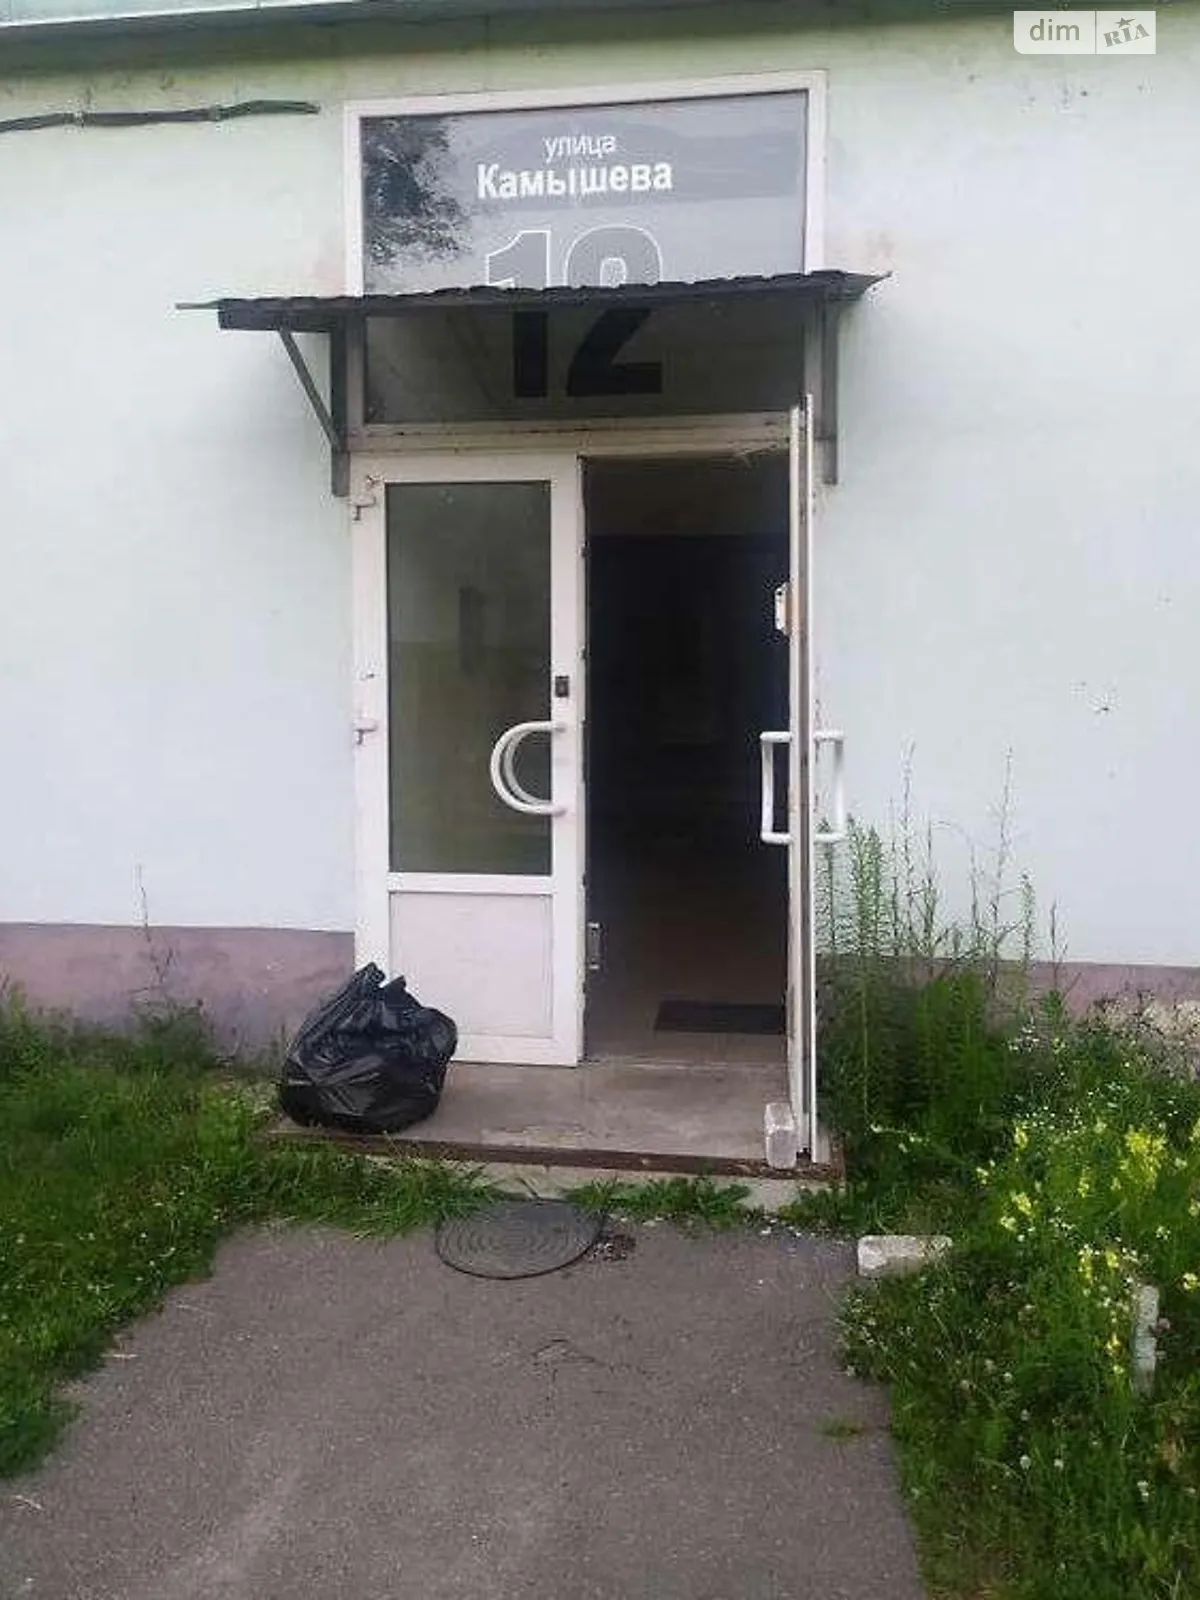 Продается комната 17 кв. м в Харькове - фото 3